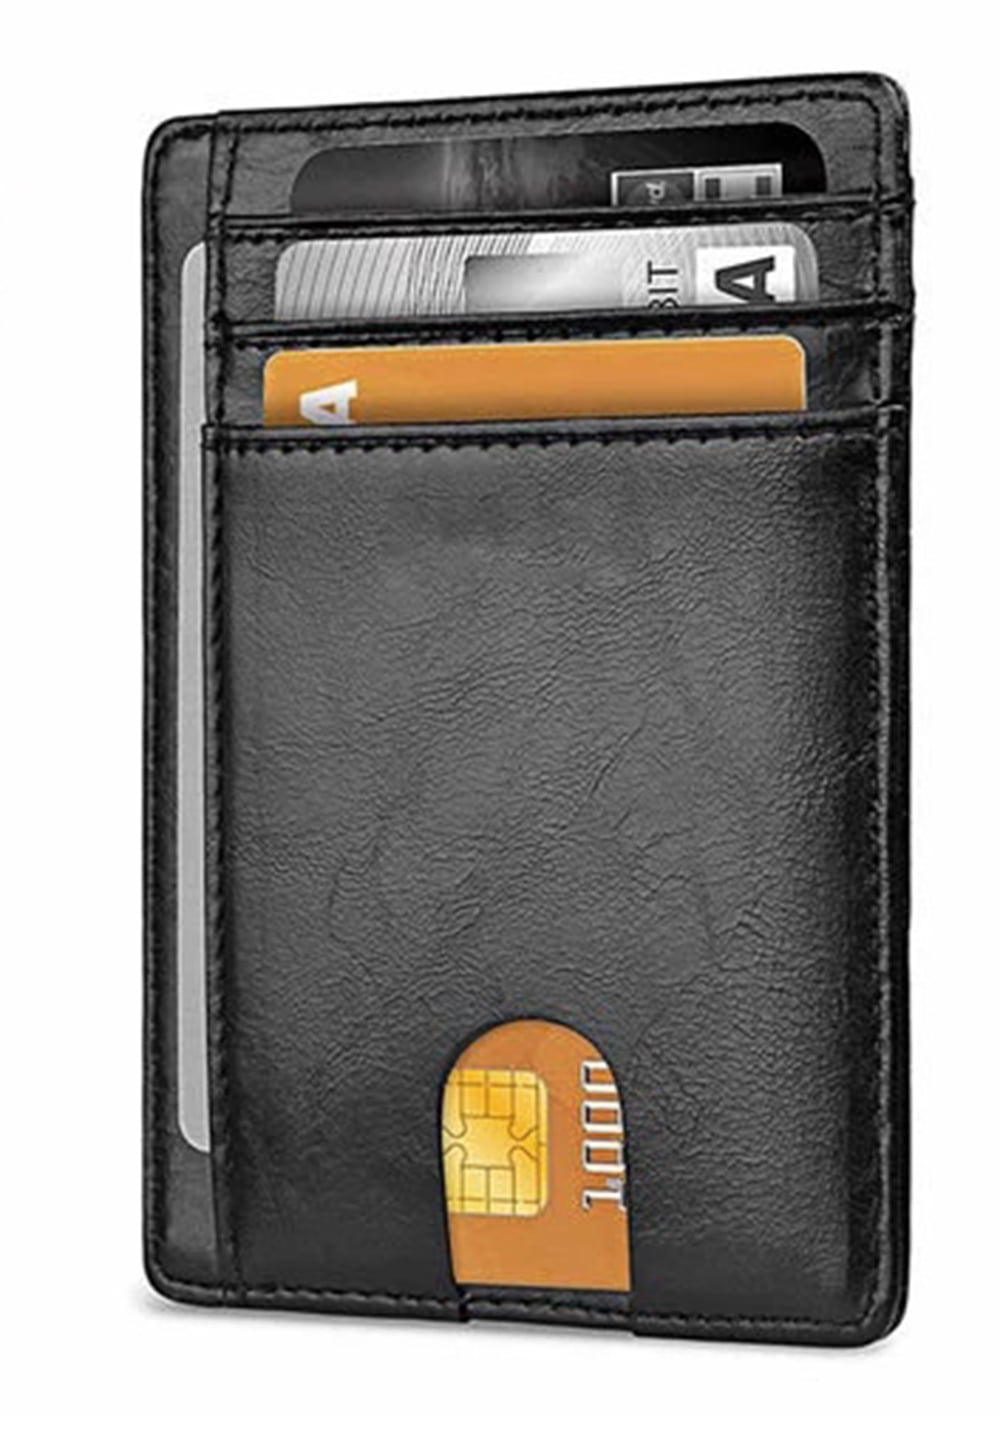 FurArt Slim Minimalist Wallet,RFID Blocking Credit Card Holder,Front Pocket Wallets for Women & Men 